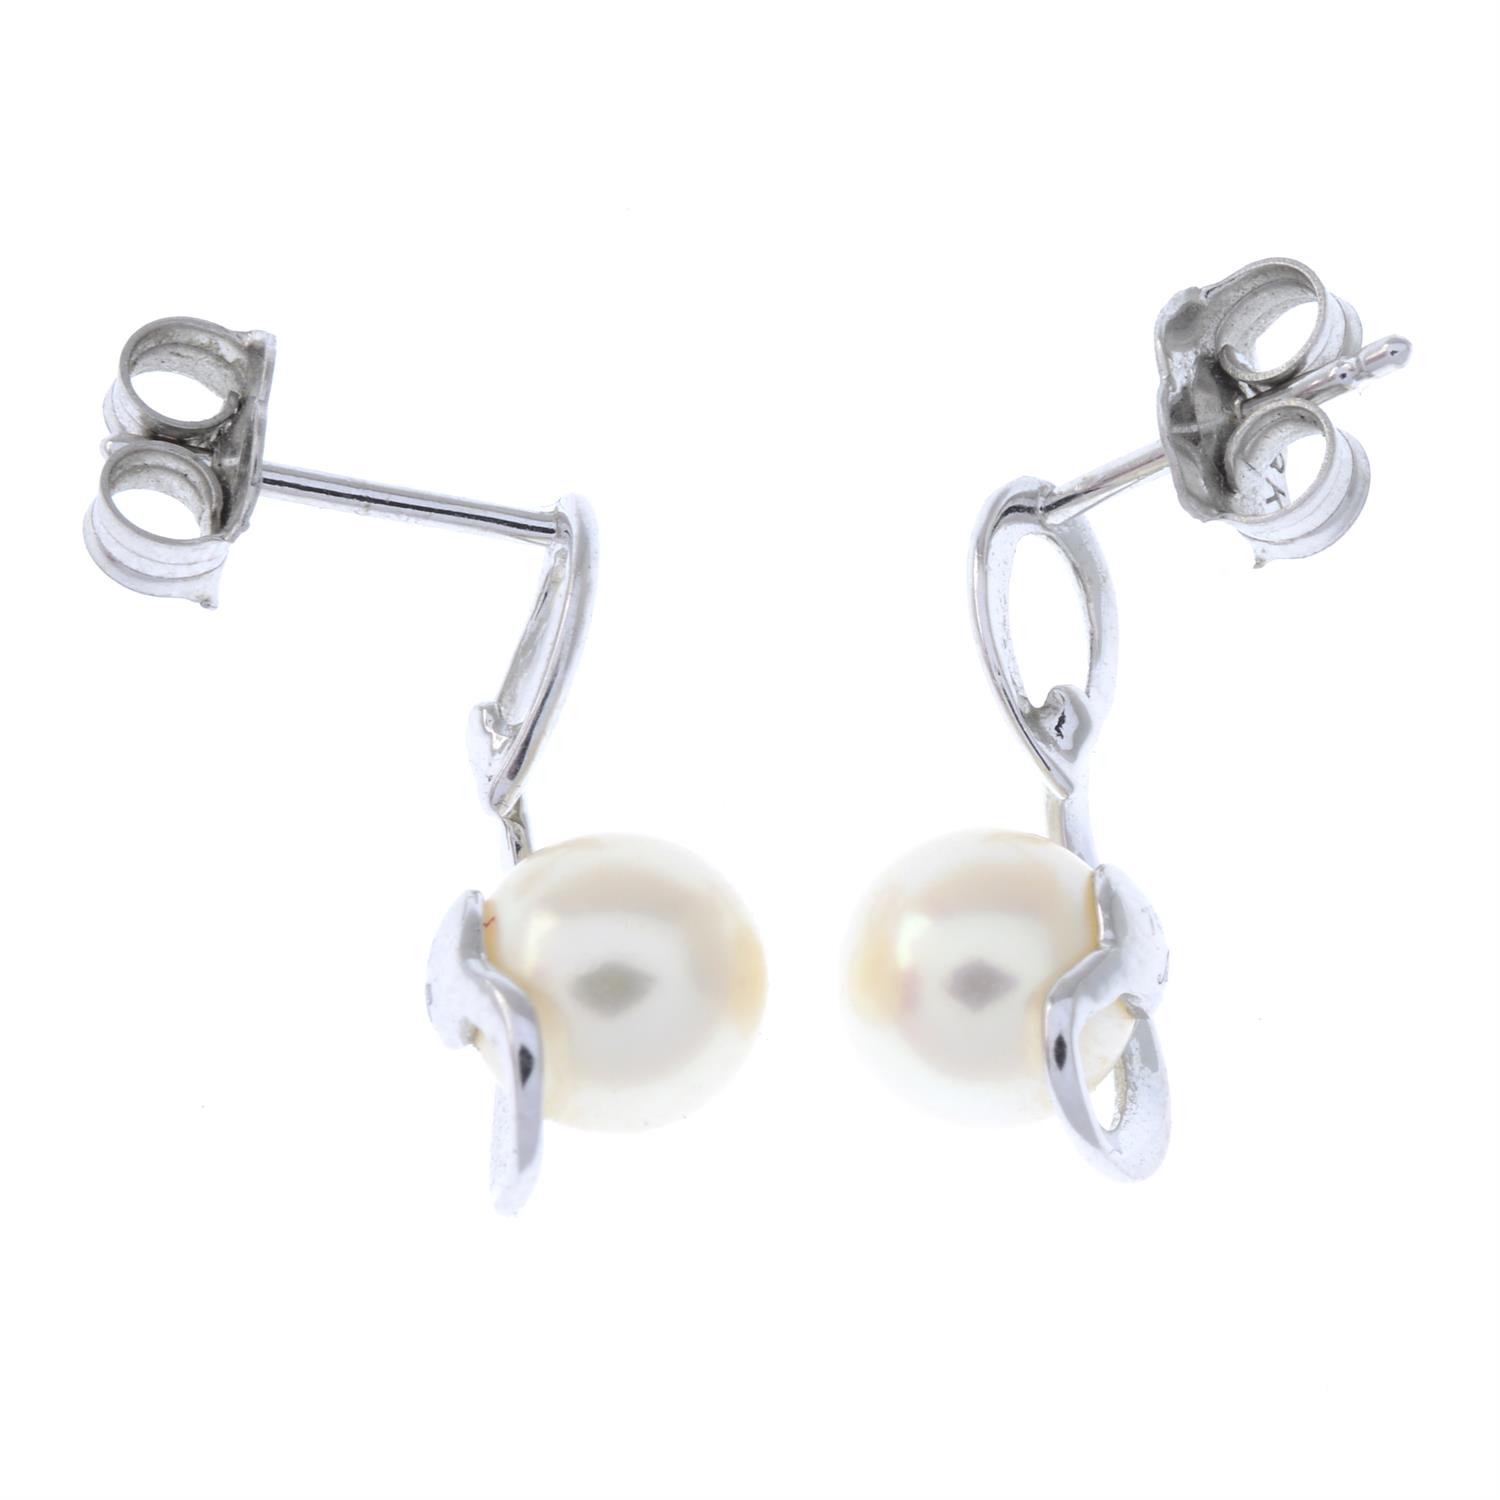 Cultured pearl earrings - Image 2 of 2